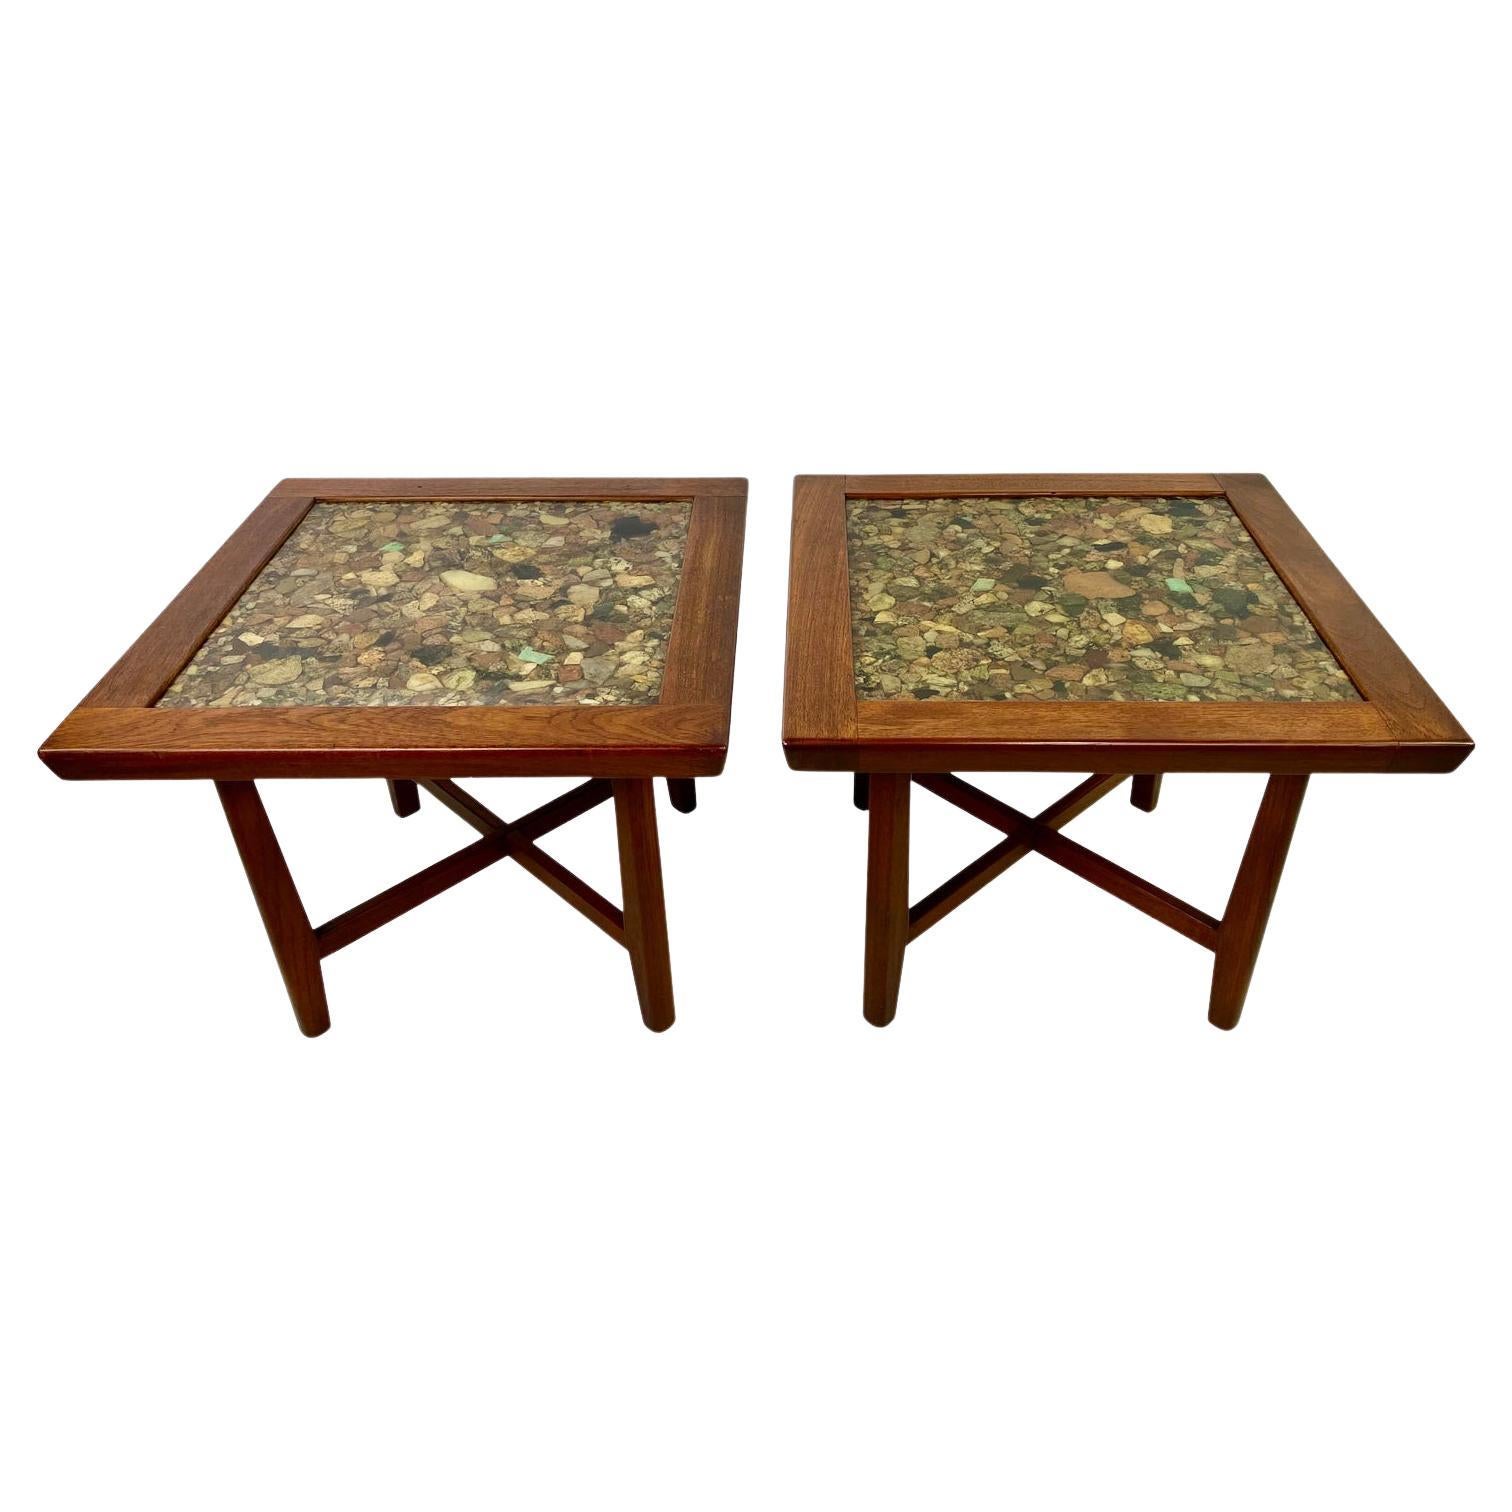 Vintage Modern Teak and Rock Resin Tables Designed by Arvid Haerum